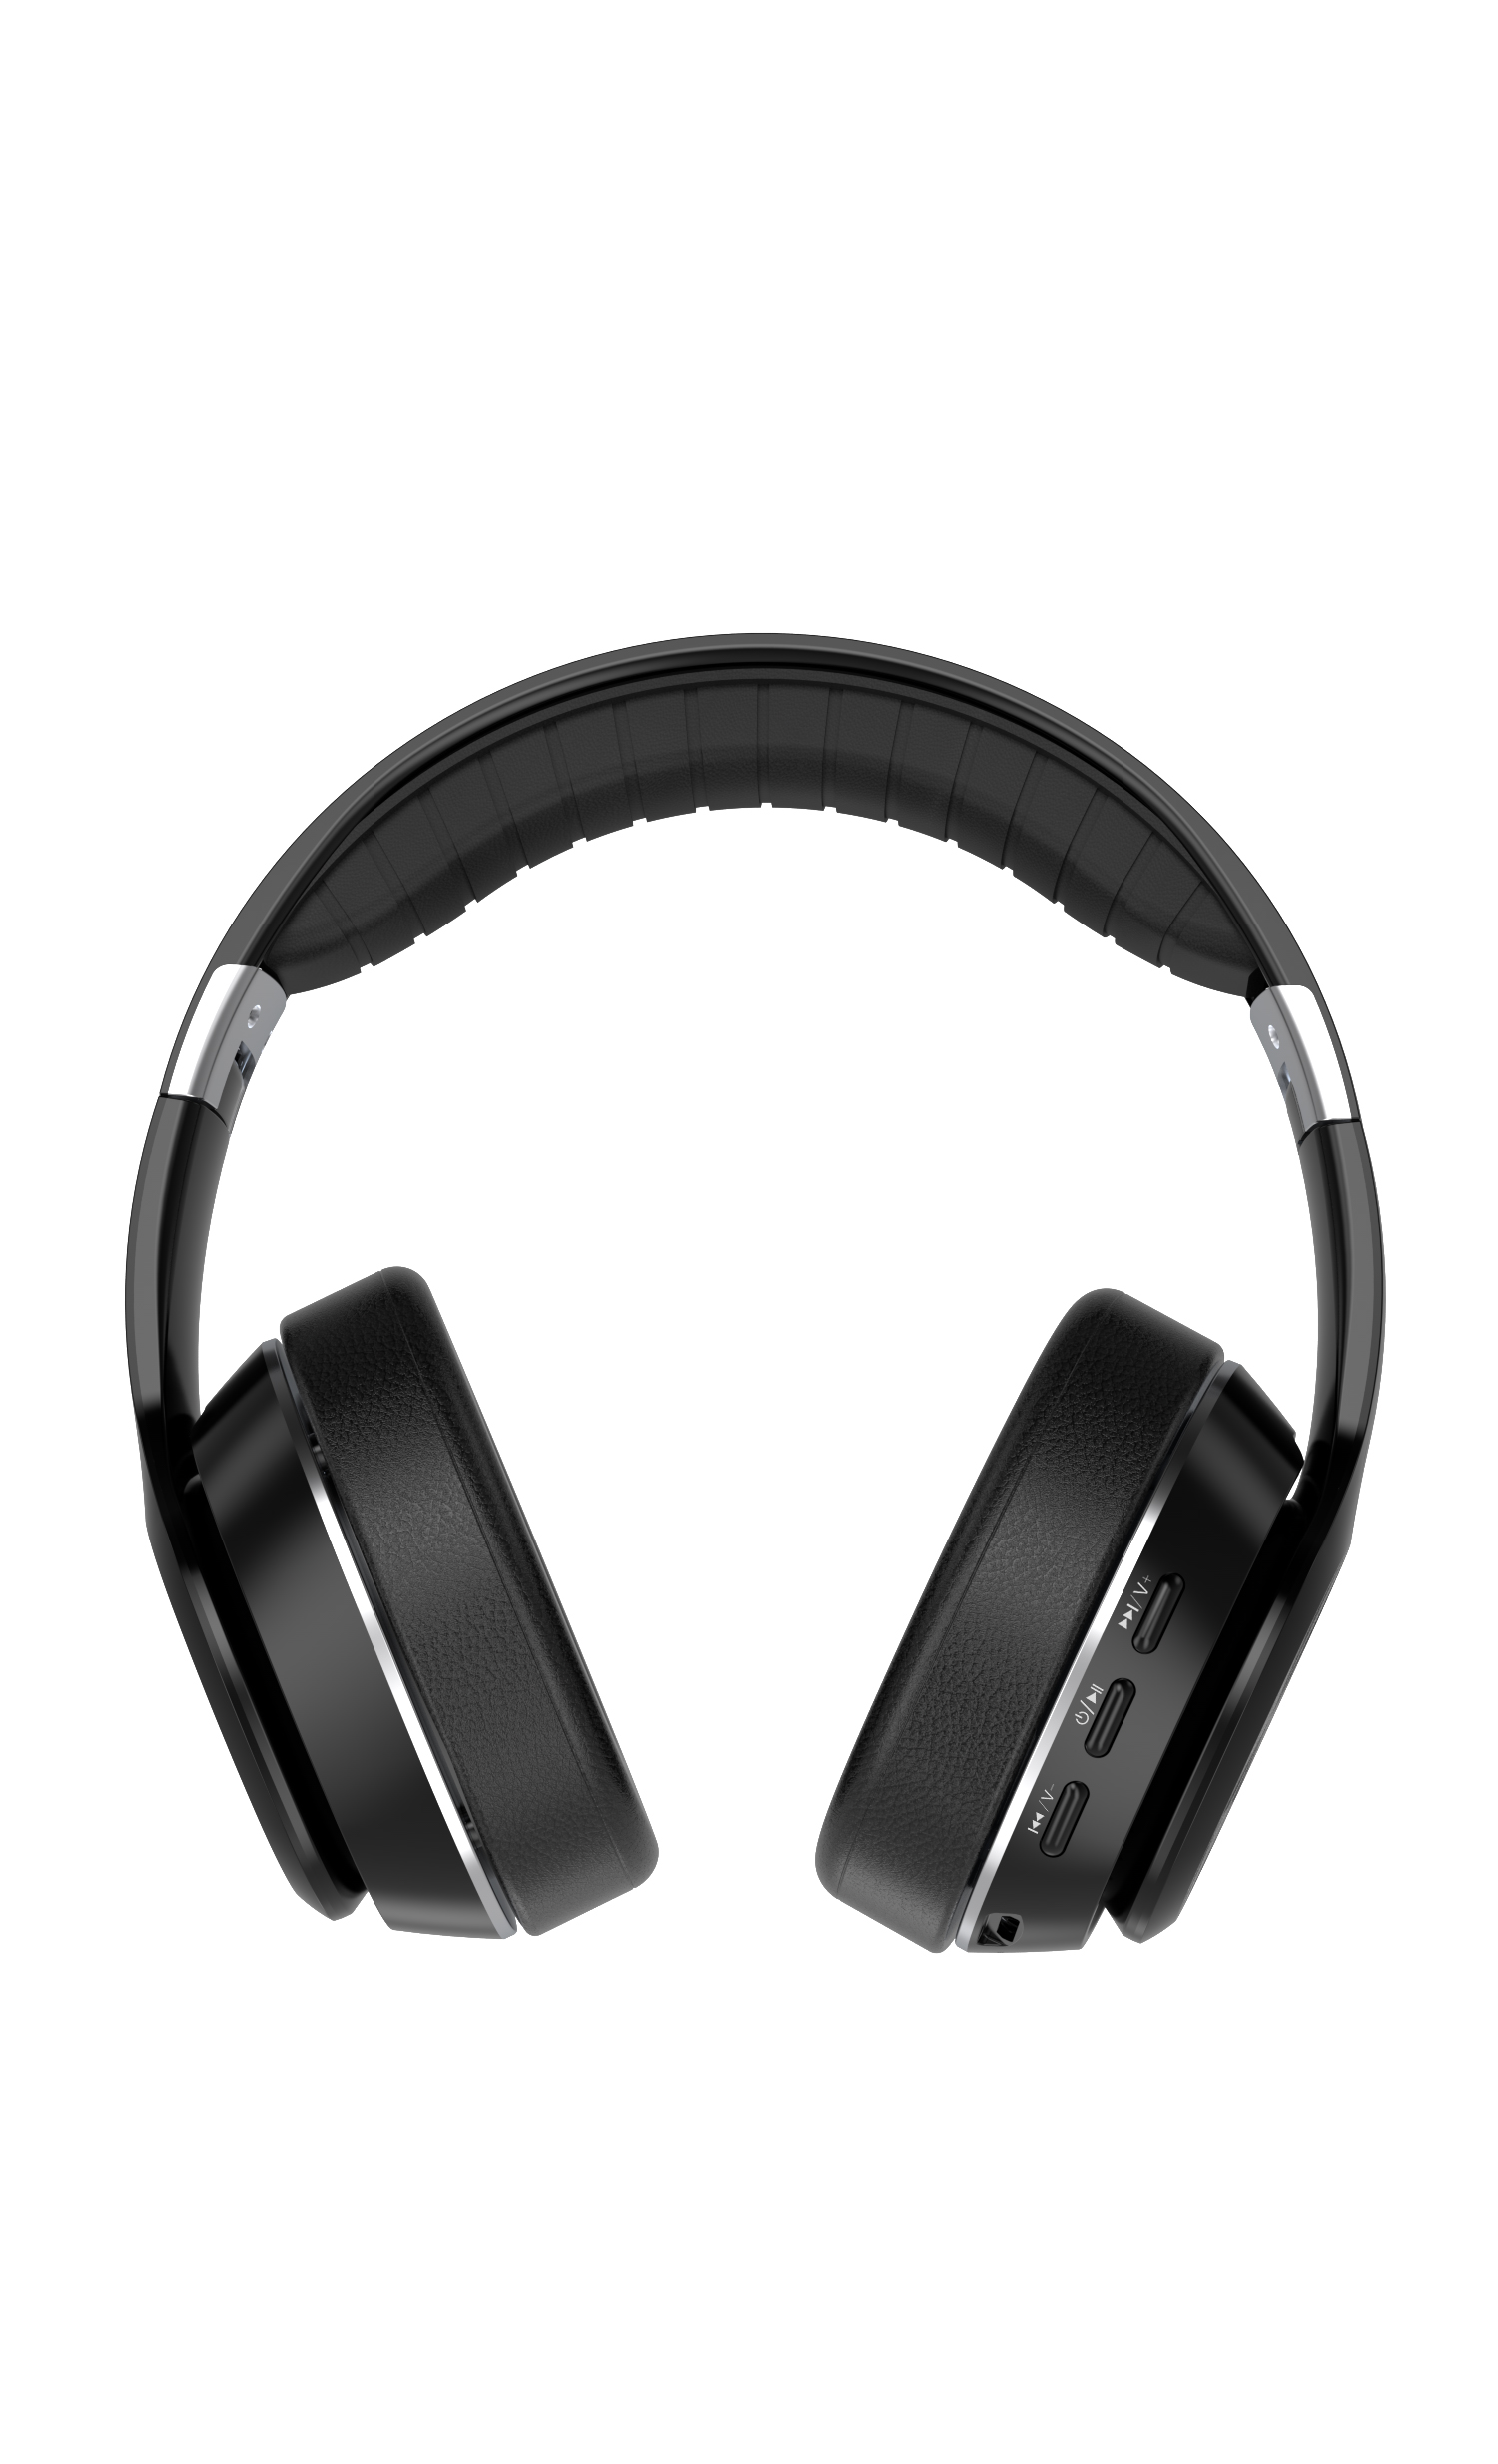 Galactic GBH-300 wireless headphones